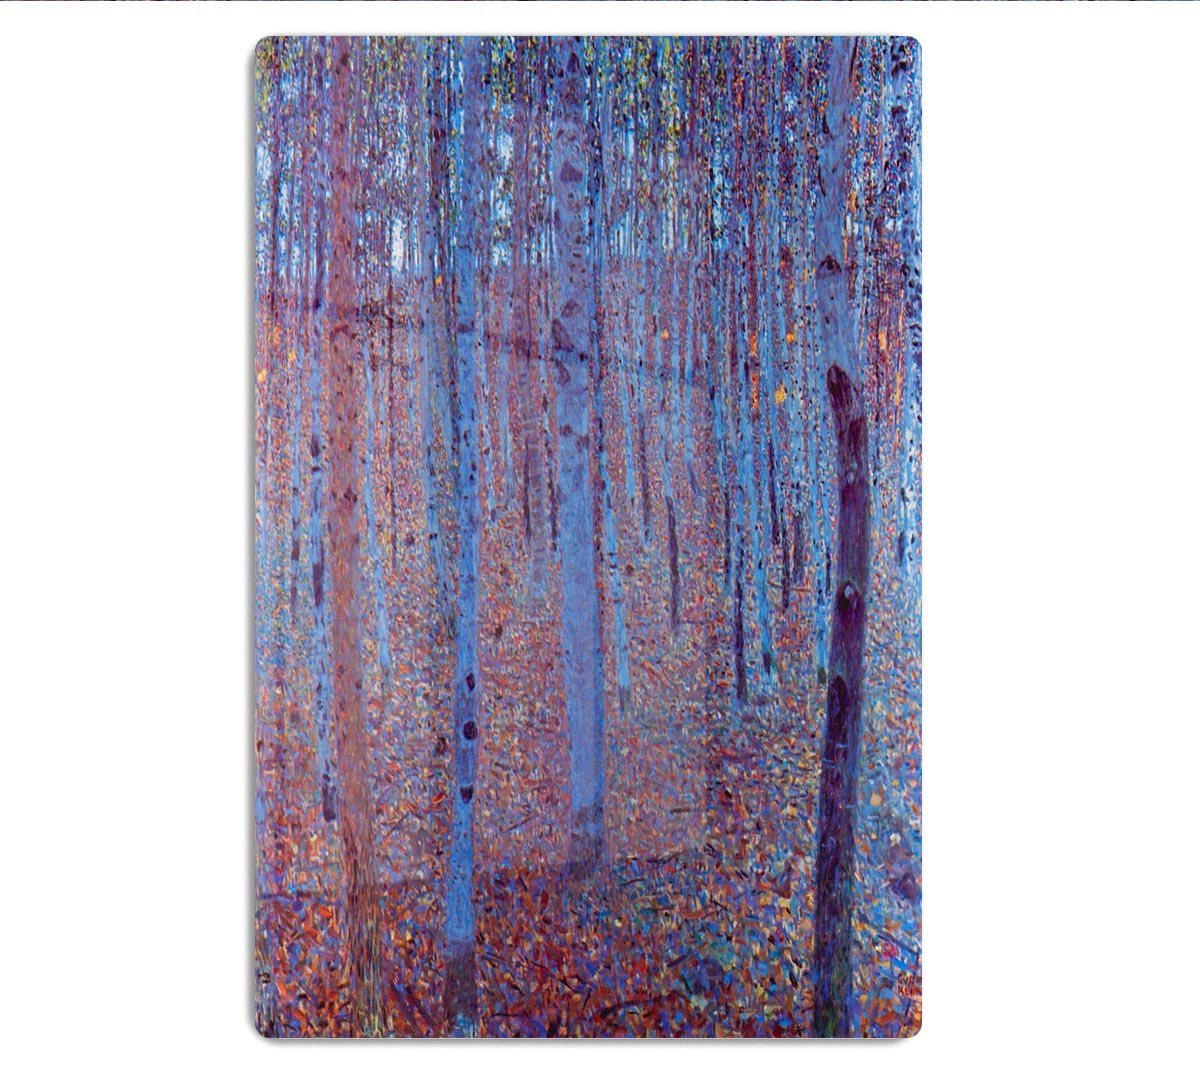 Beech Forest by Klimt HD Metal Print